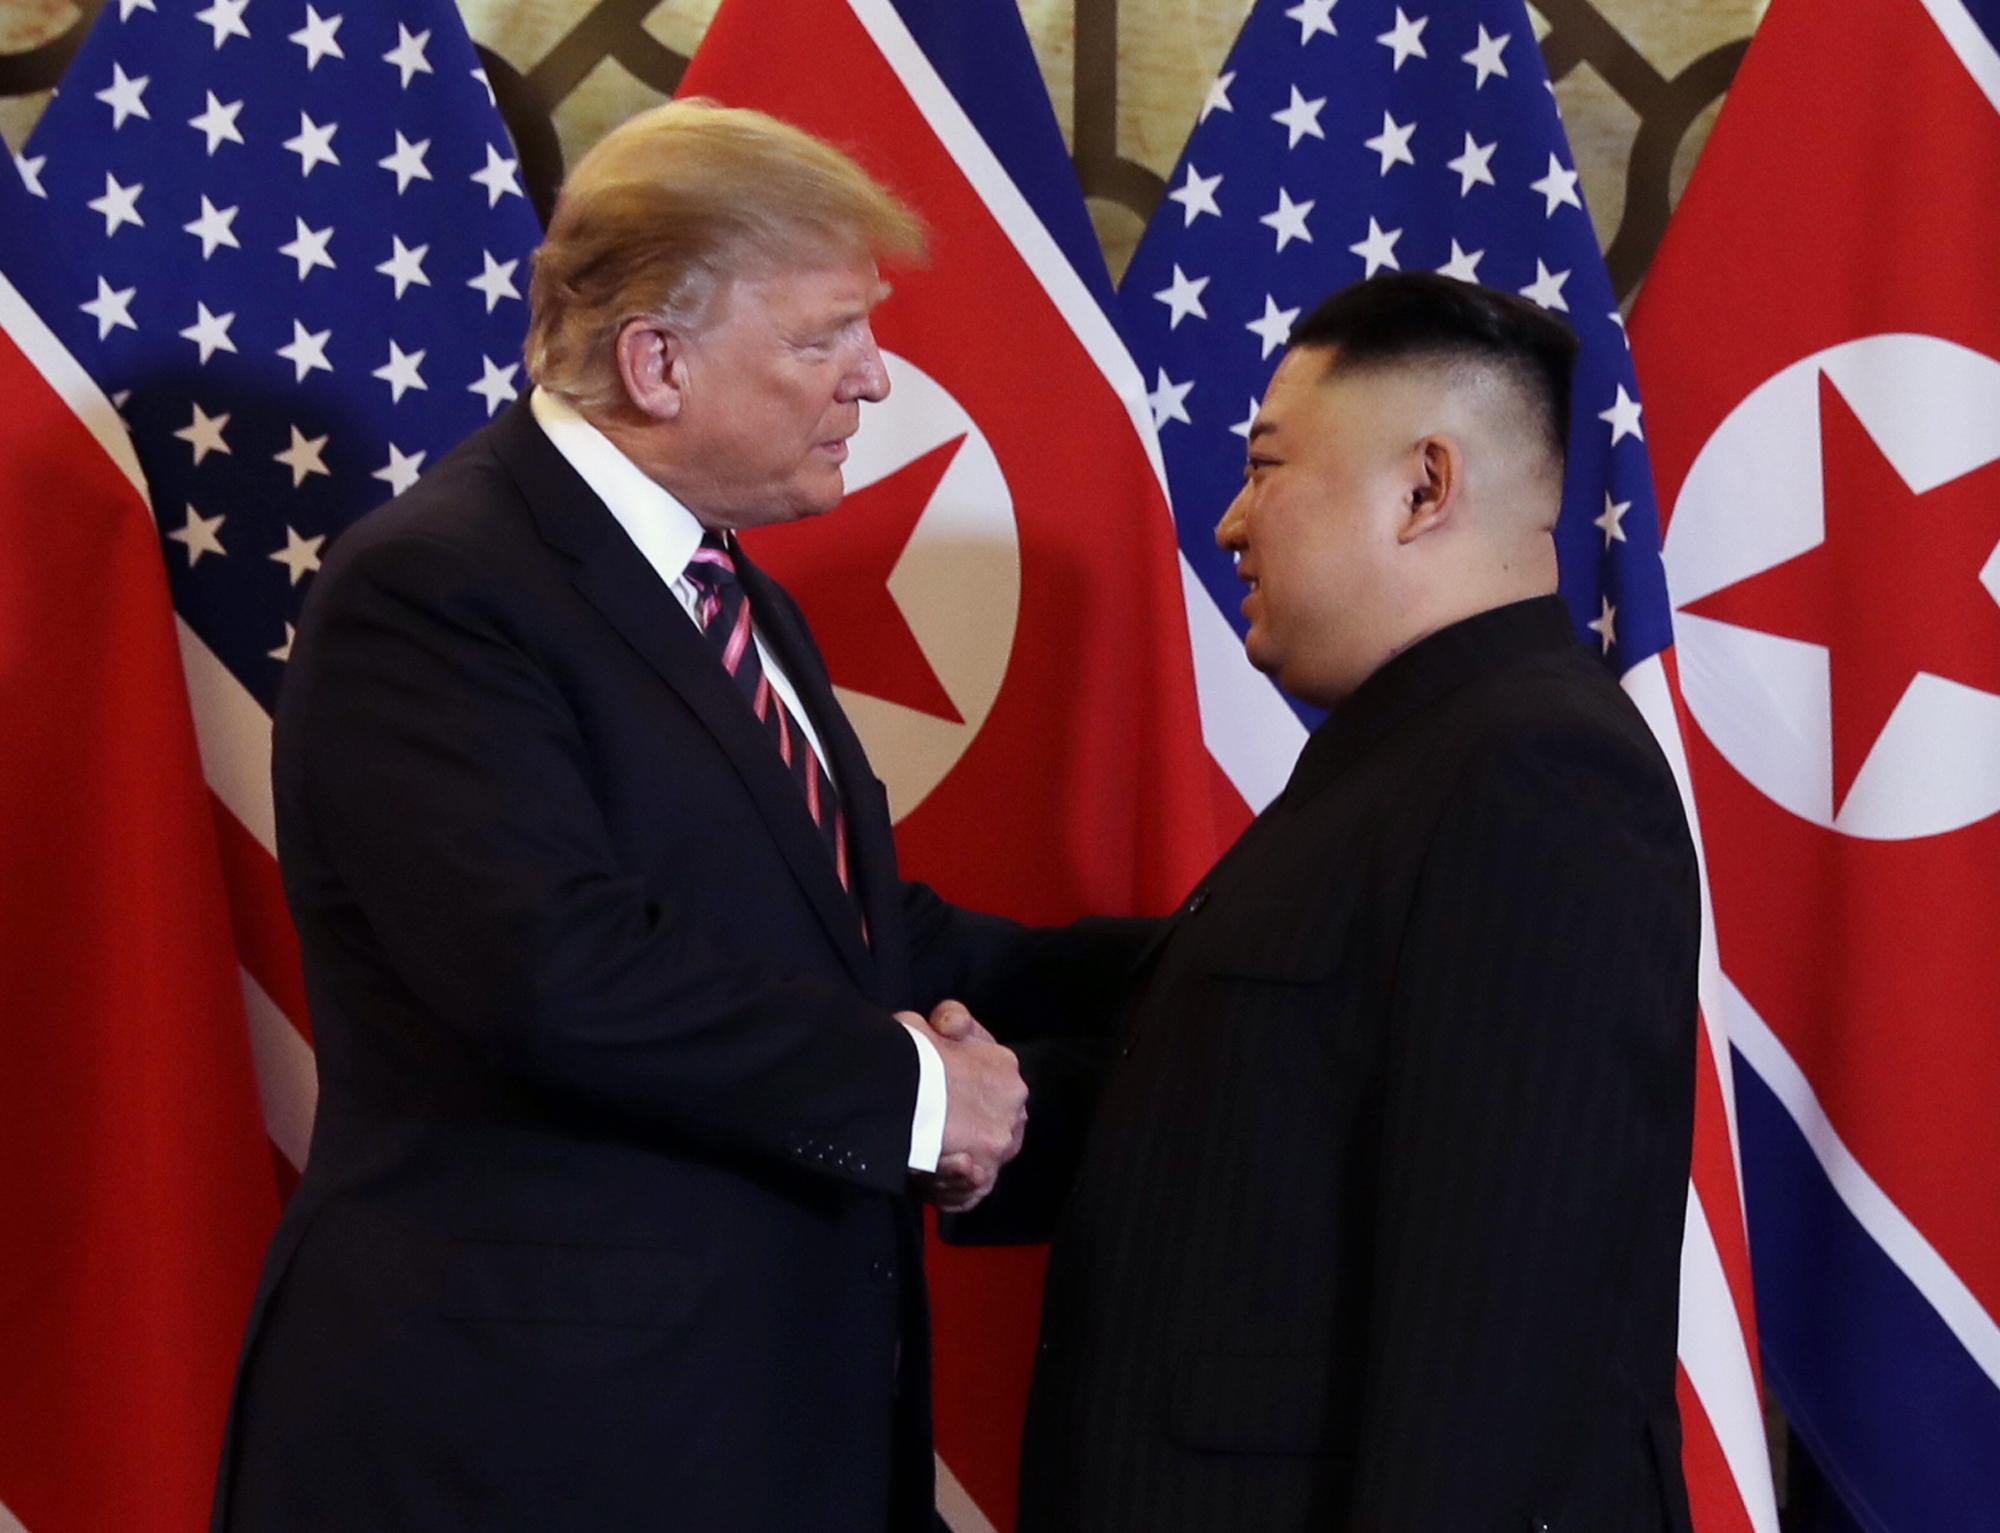 President Donald Trump and North Korean leader Kim Jong Un shake hands to start their summit in Hanoi, Vietnam on February 27, 2019.